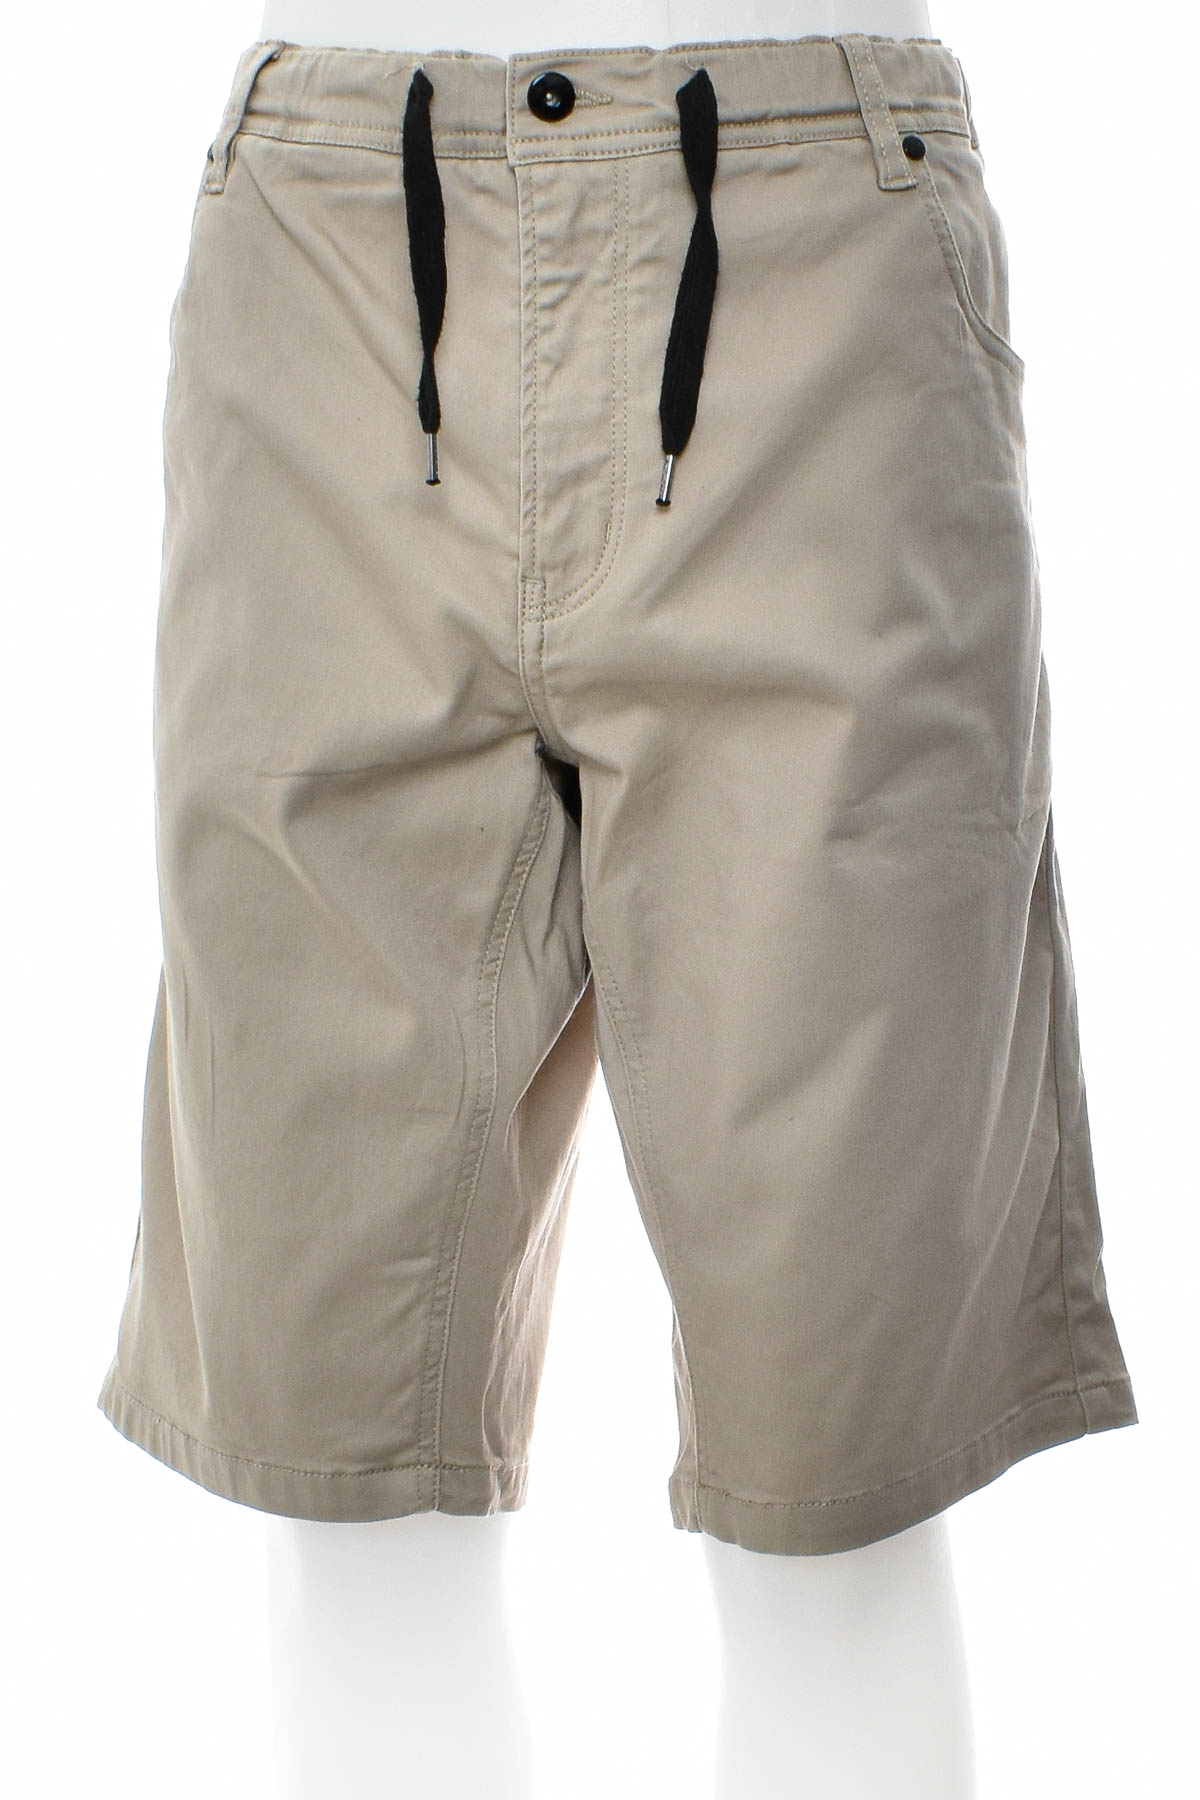 Men's shorts - JOHNNY BIGG - 0